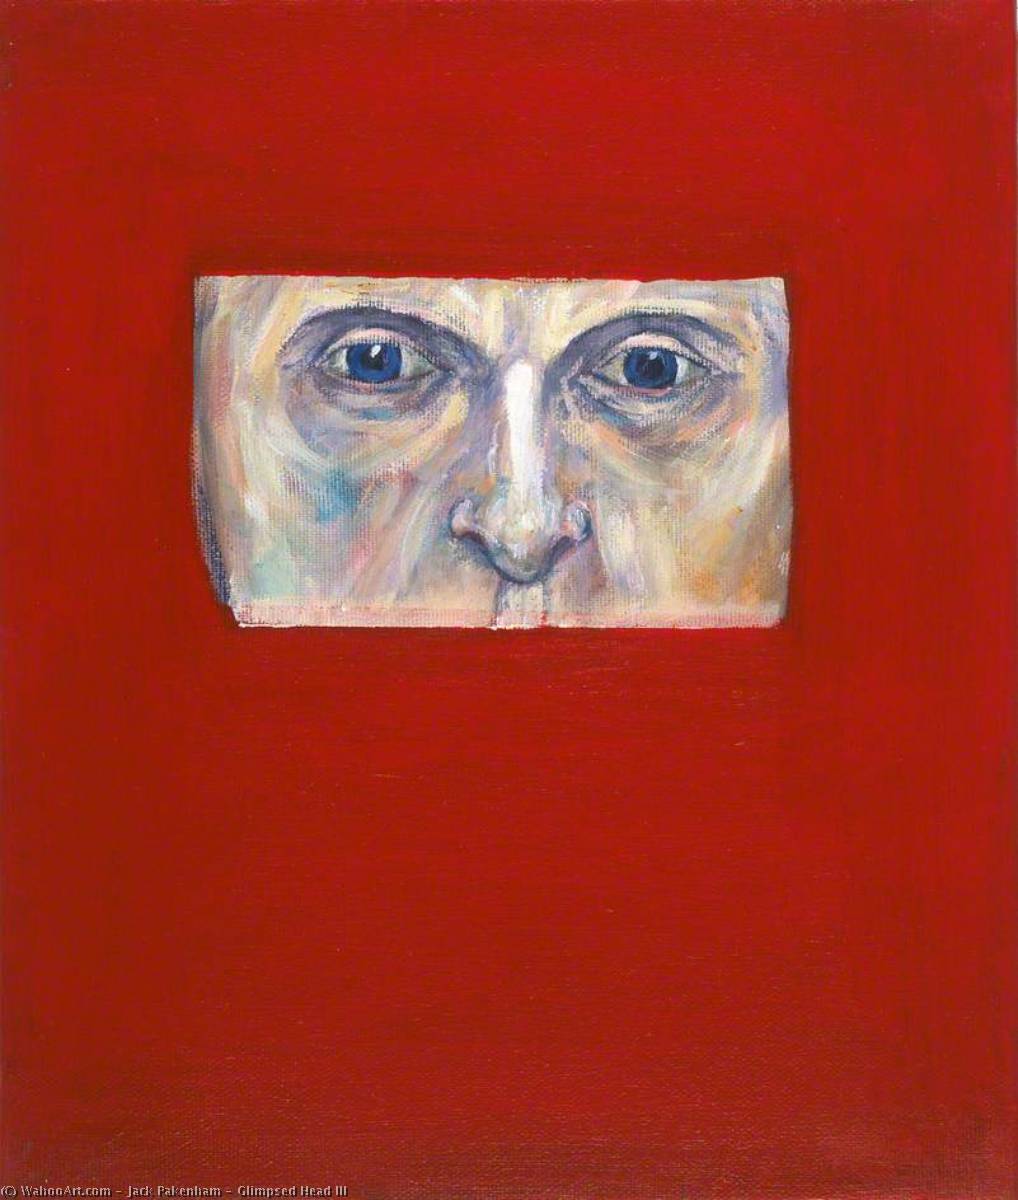 Glimpsed Head III, 2003 by Jack Pakenham Jack Pakenham | ArtsDot.com